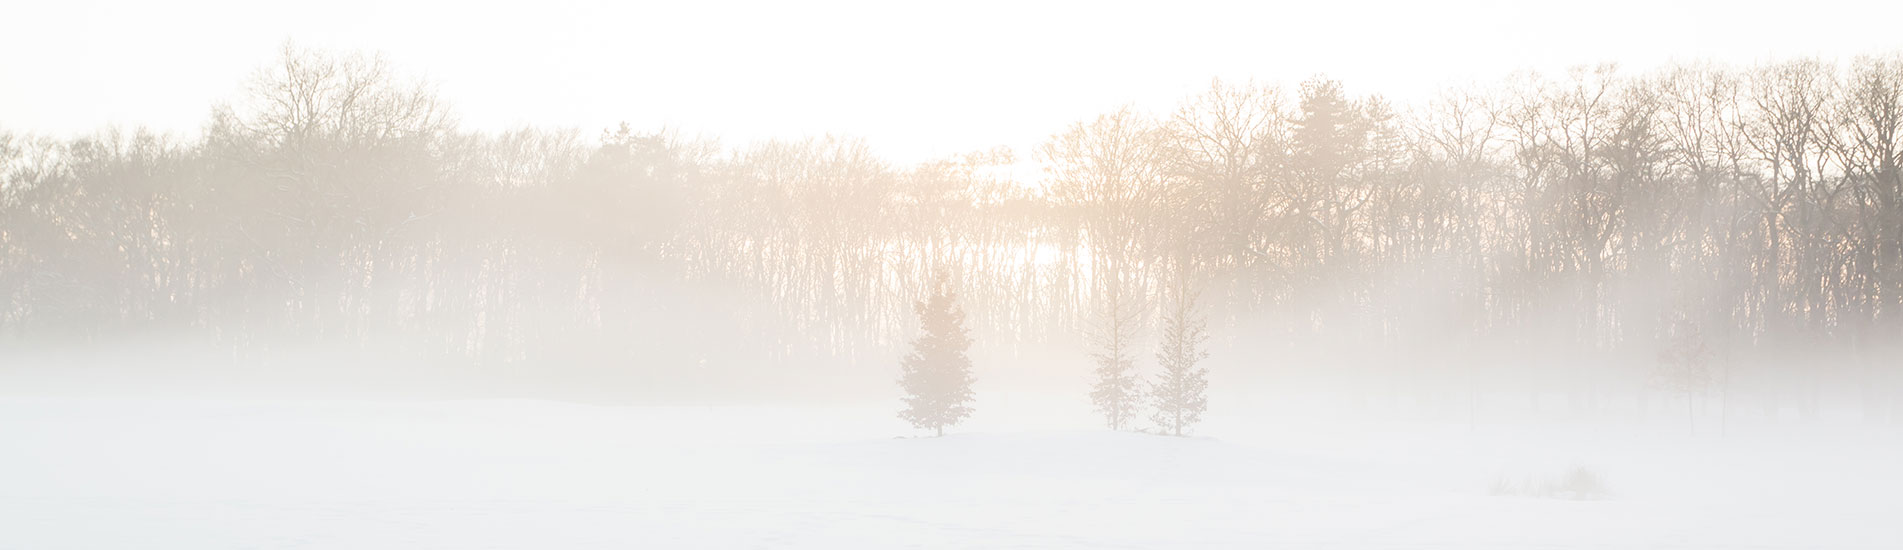 Winter foto de Veluwe